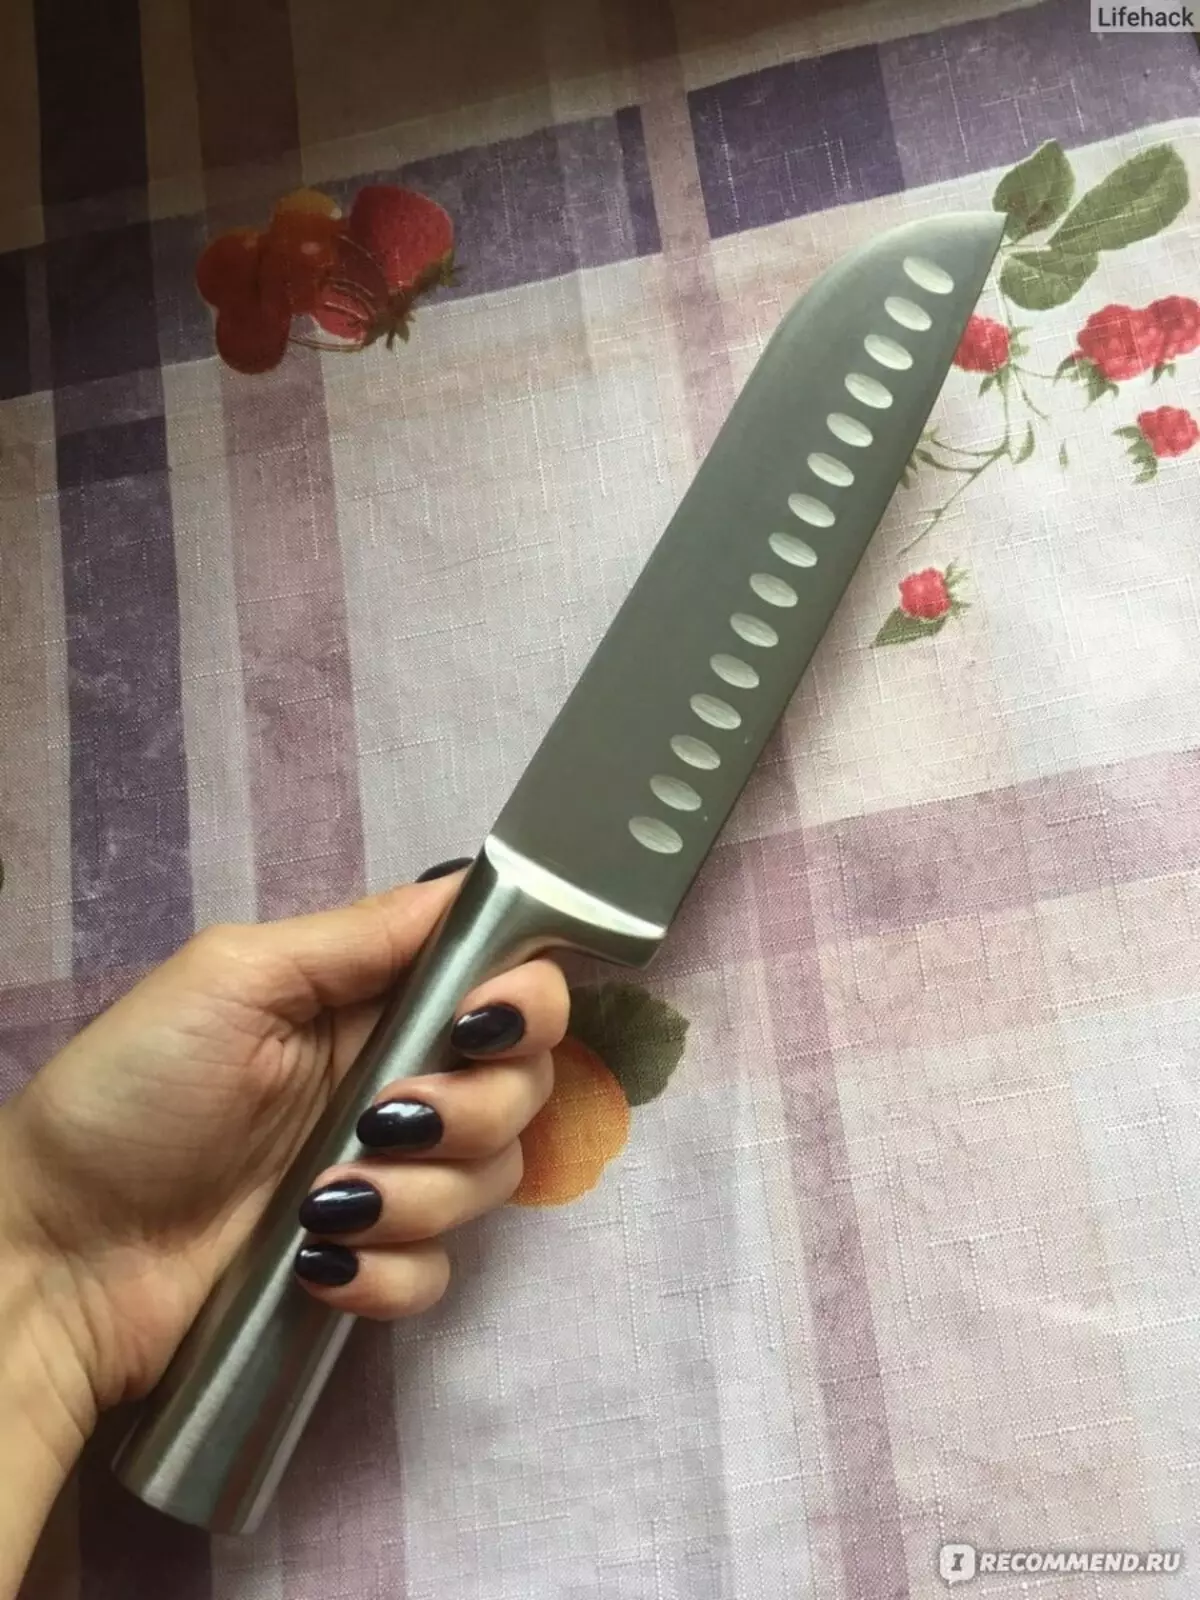 TEFAL μαχαίρια: Επισκόπηση μαχαιριών κουζίνας, τεχνογνωσία και άλλες σειρές. Κριτικές Πελατών 23462_12